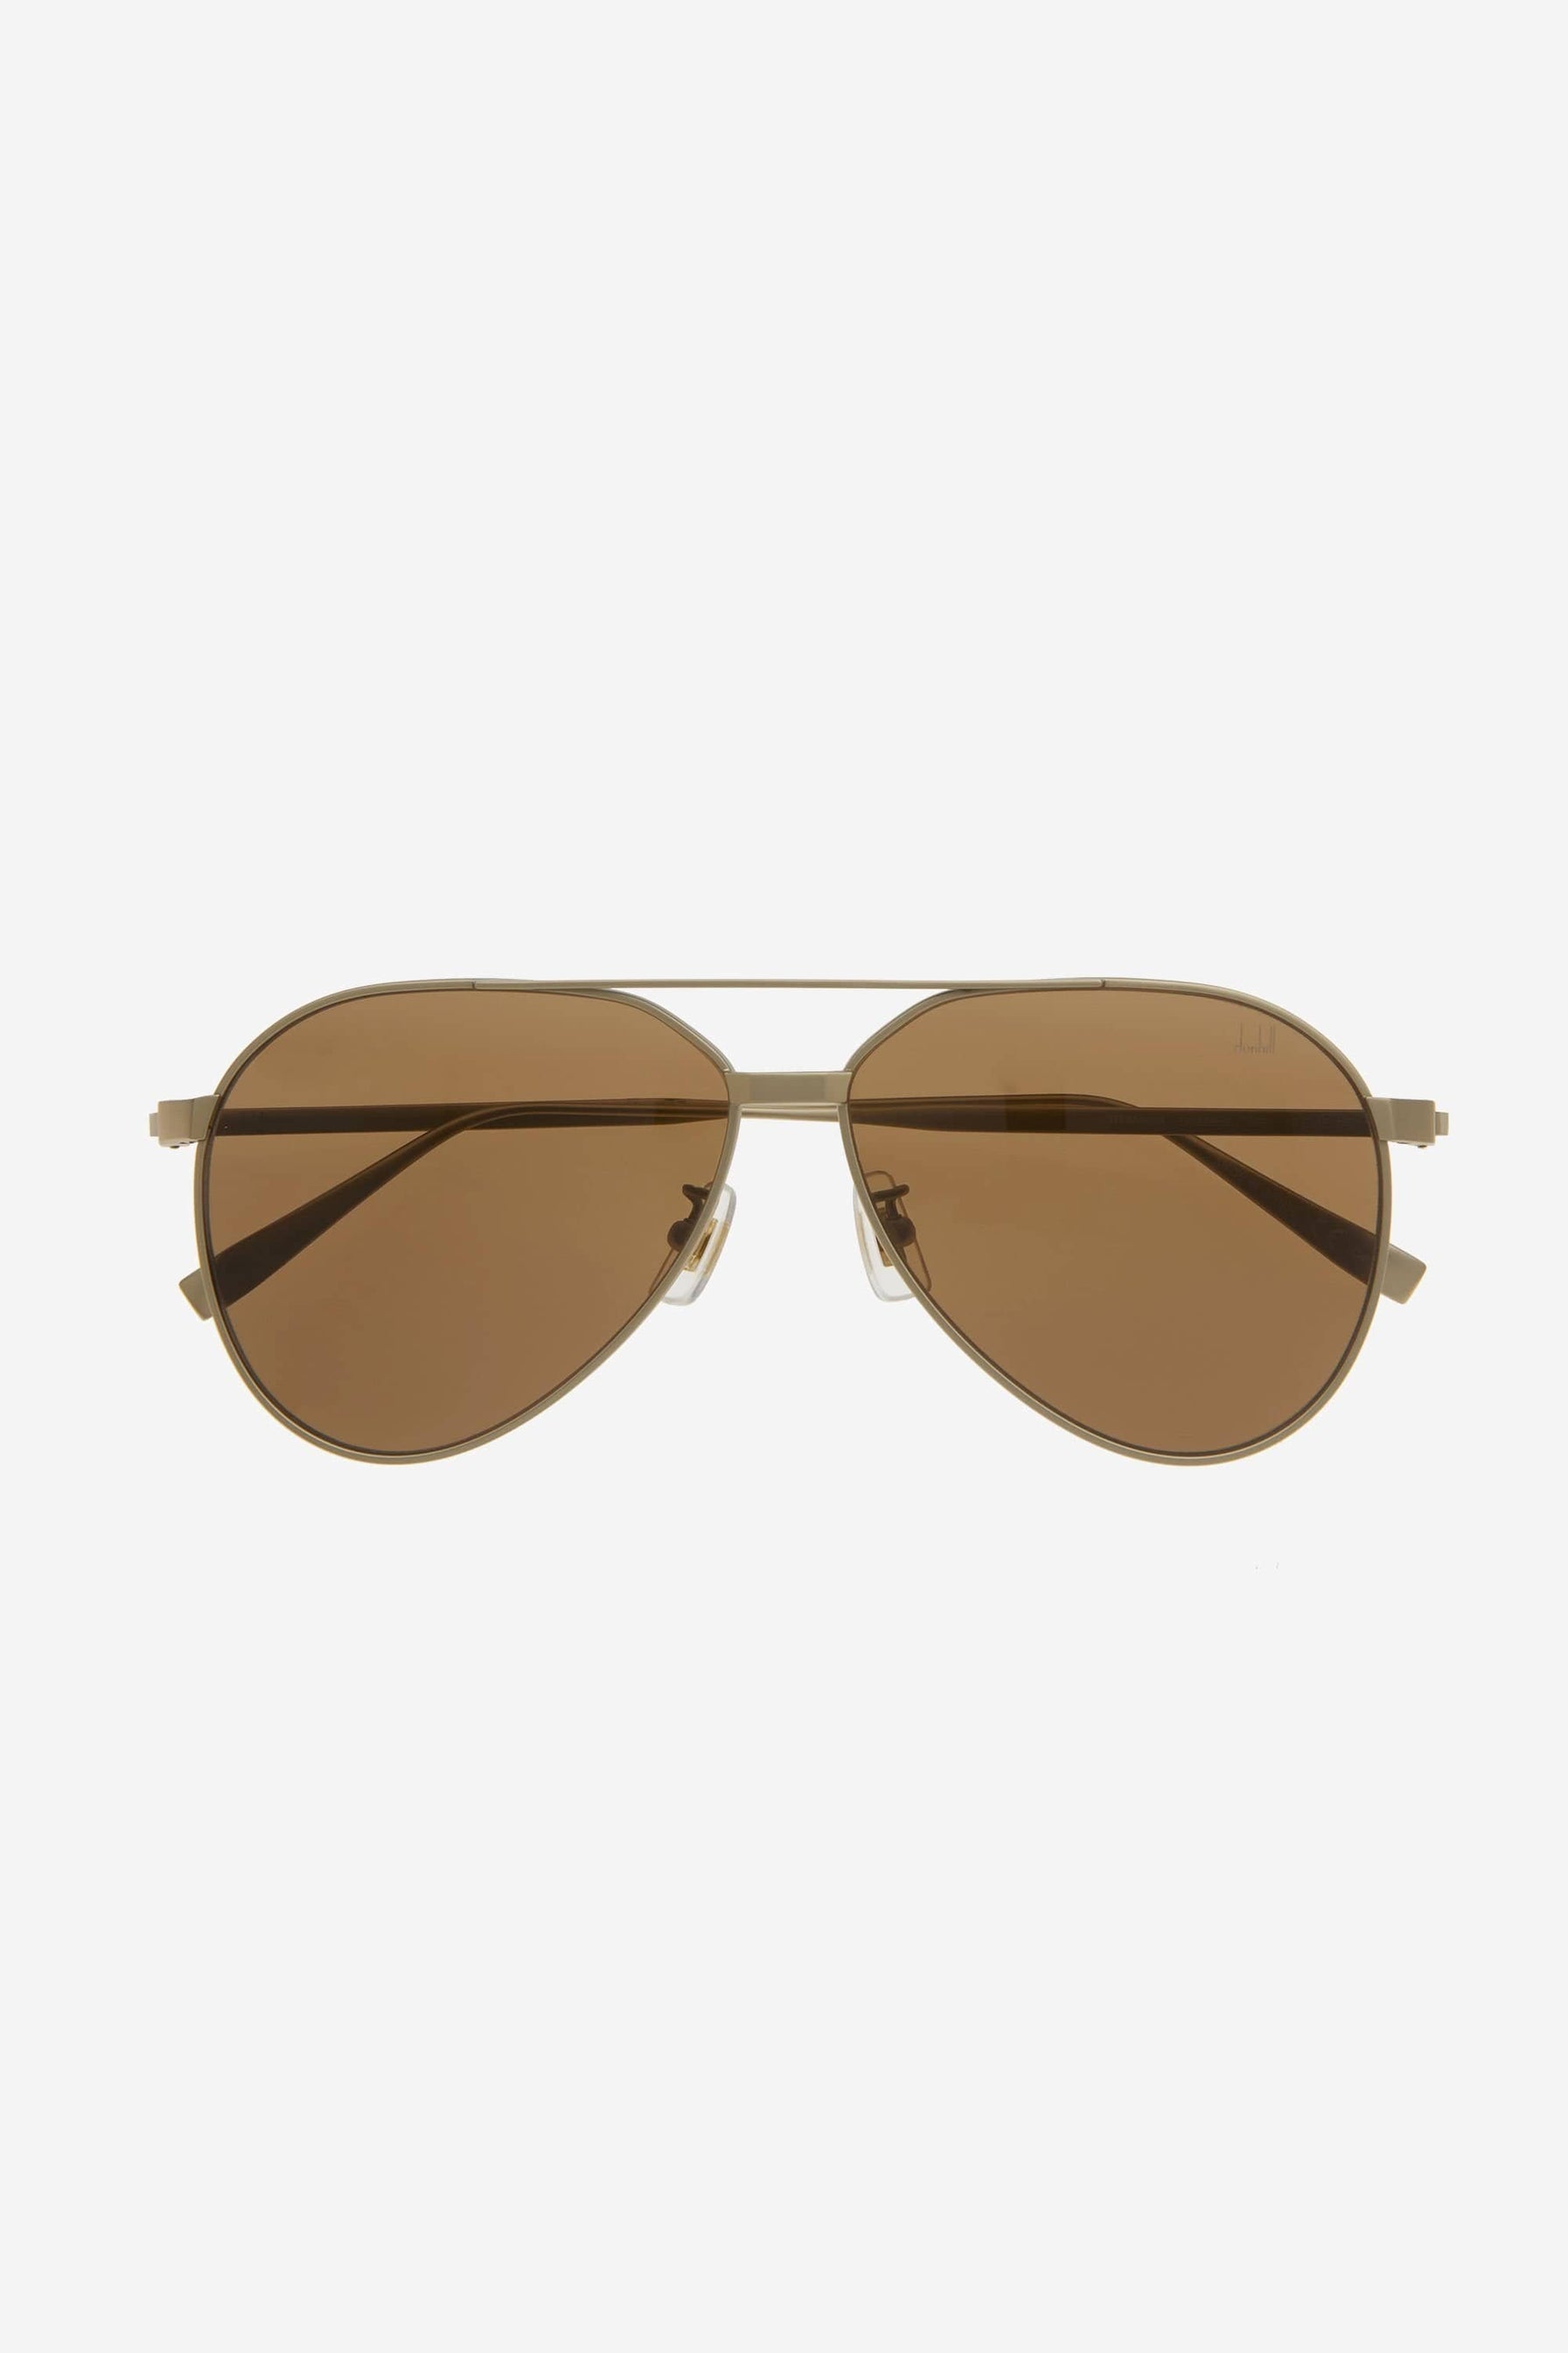 Dunhill pilot gold brown titanium sunglasses - Eyewear Club